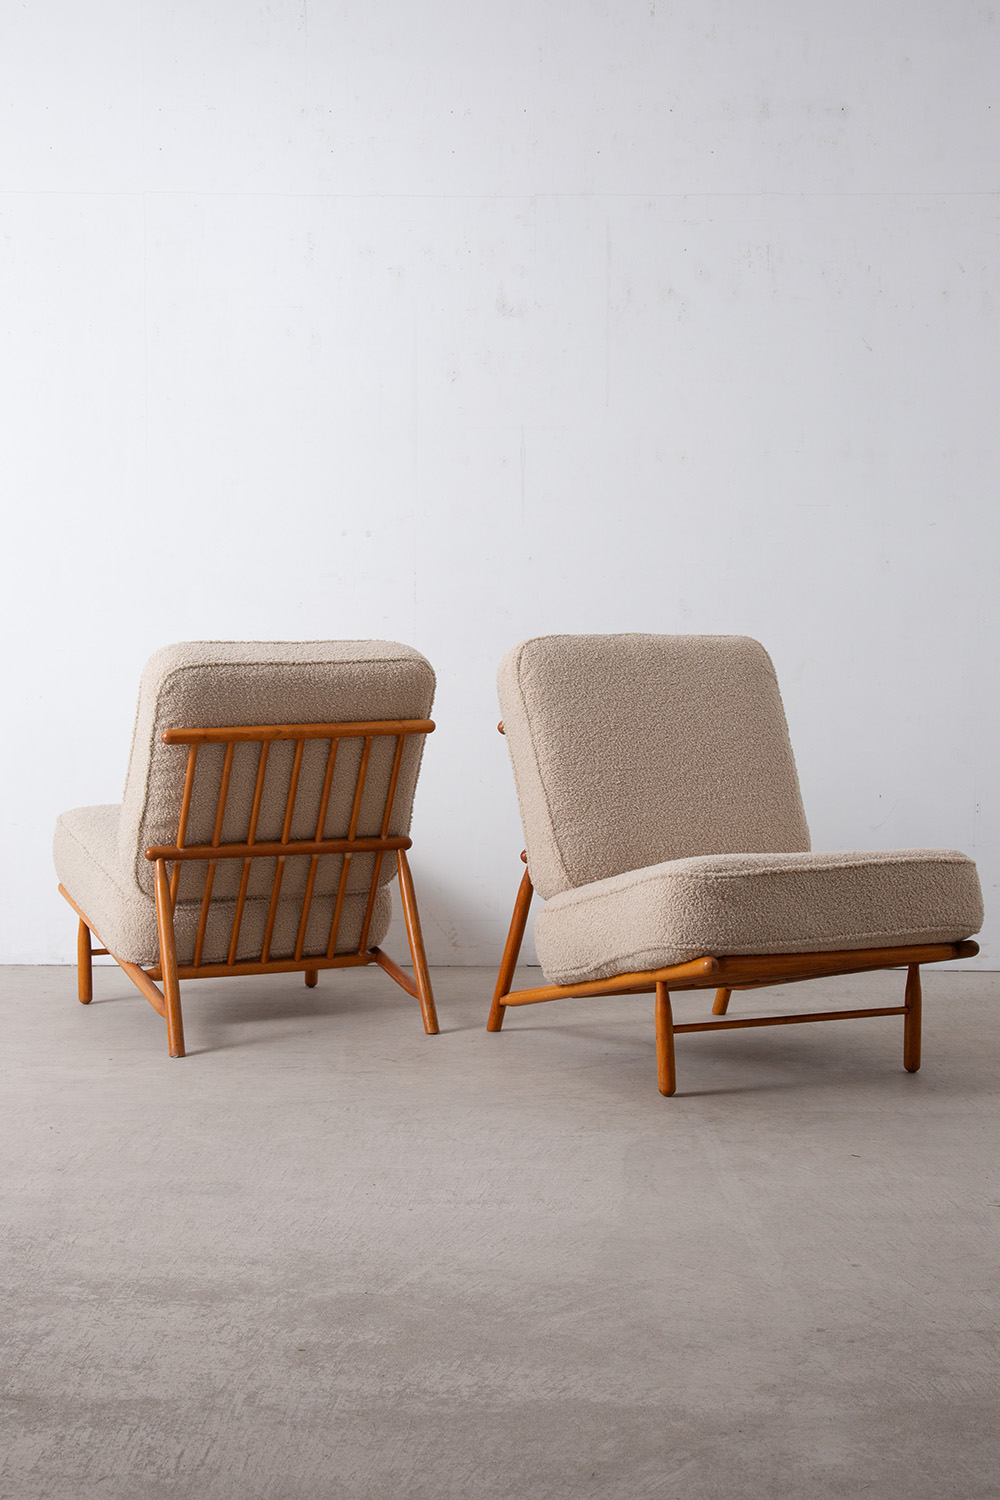 Easy Chair “Interiör” by Alf Svenson for DUX in Oak